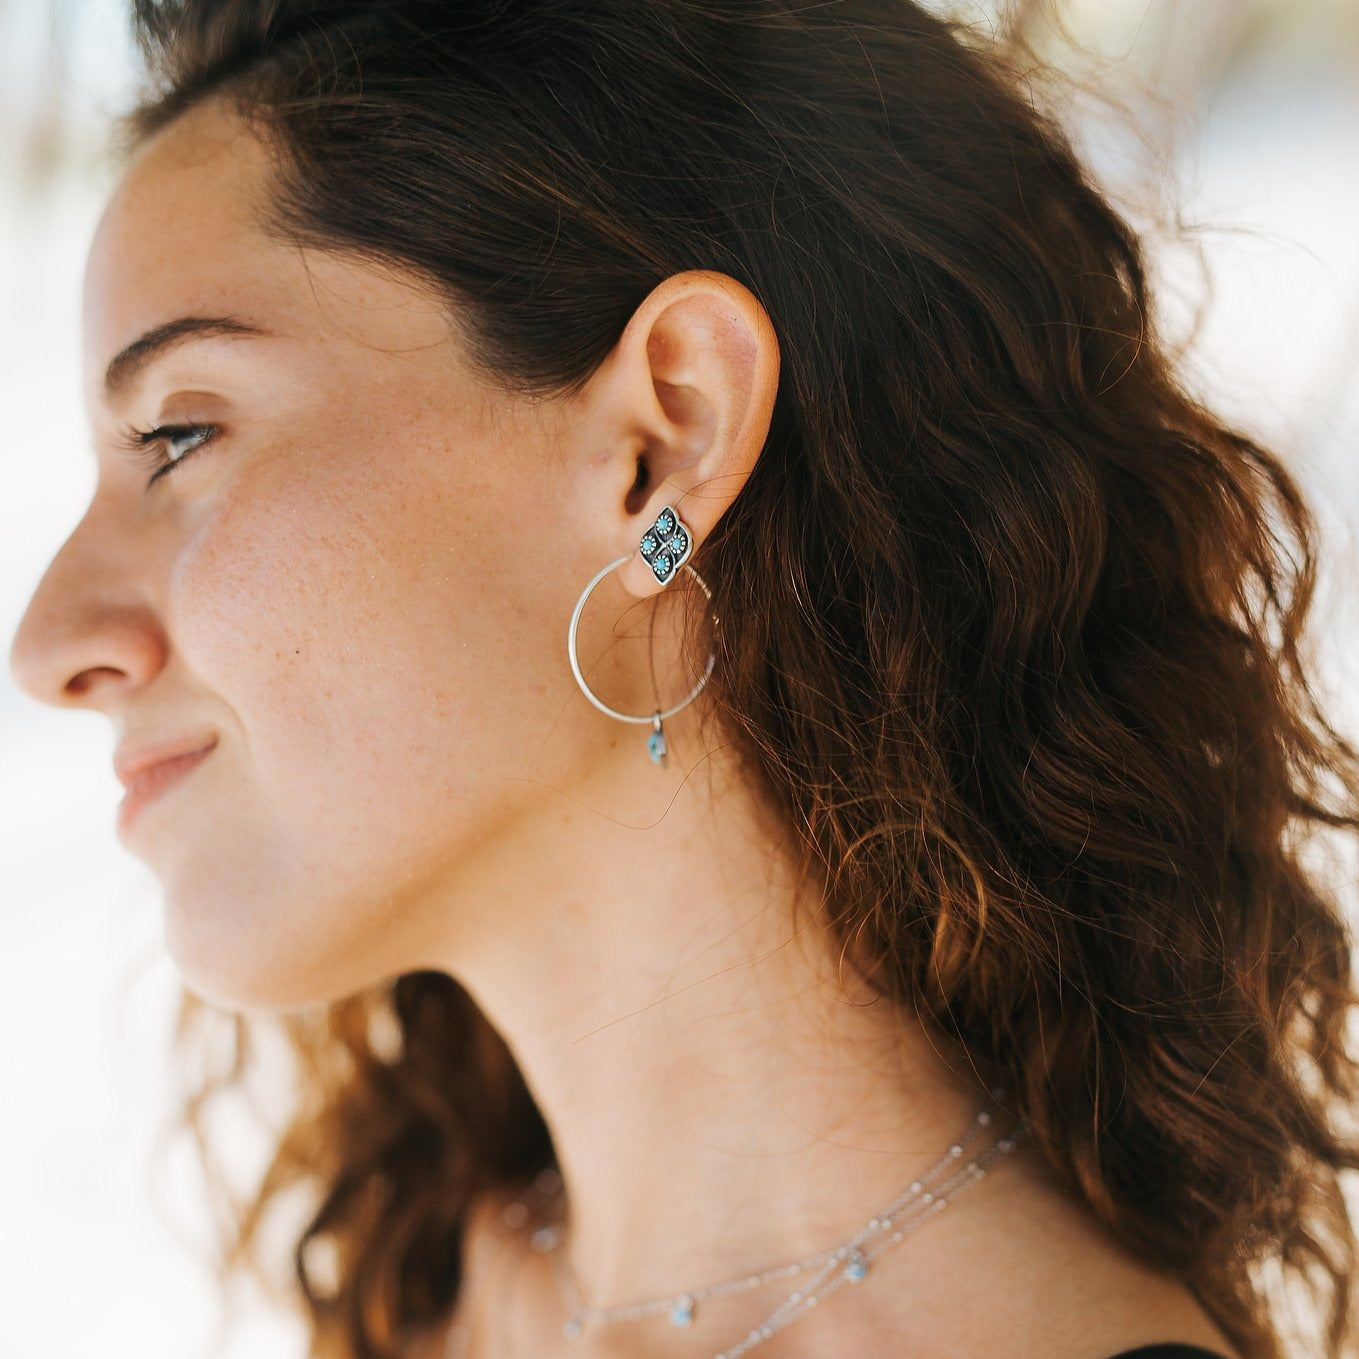 Dior Turquoise Hoop Earrings - SOWELL JEWELRY